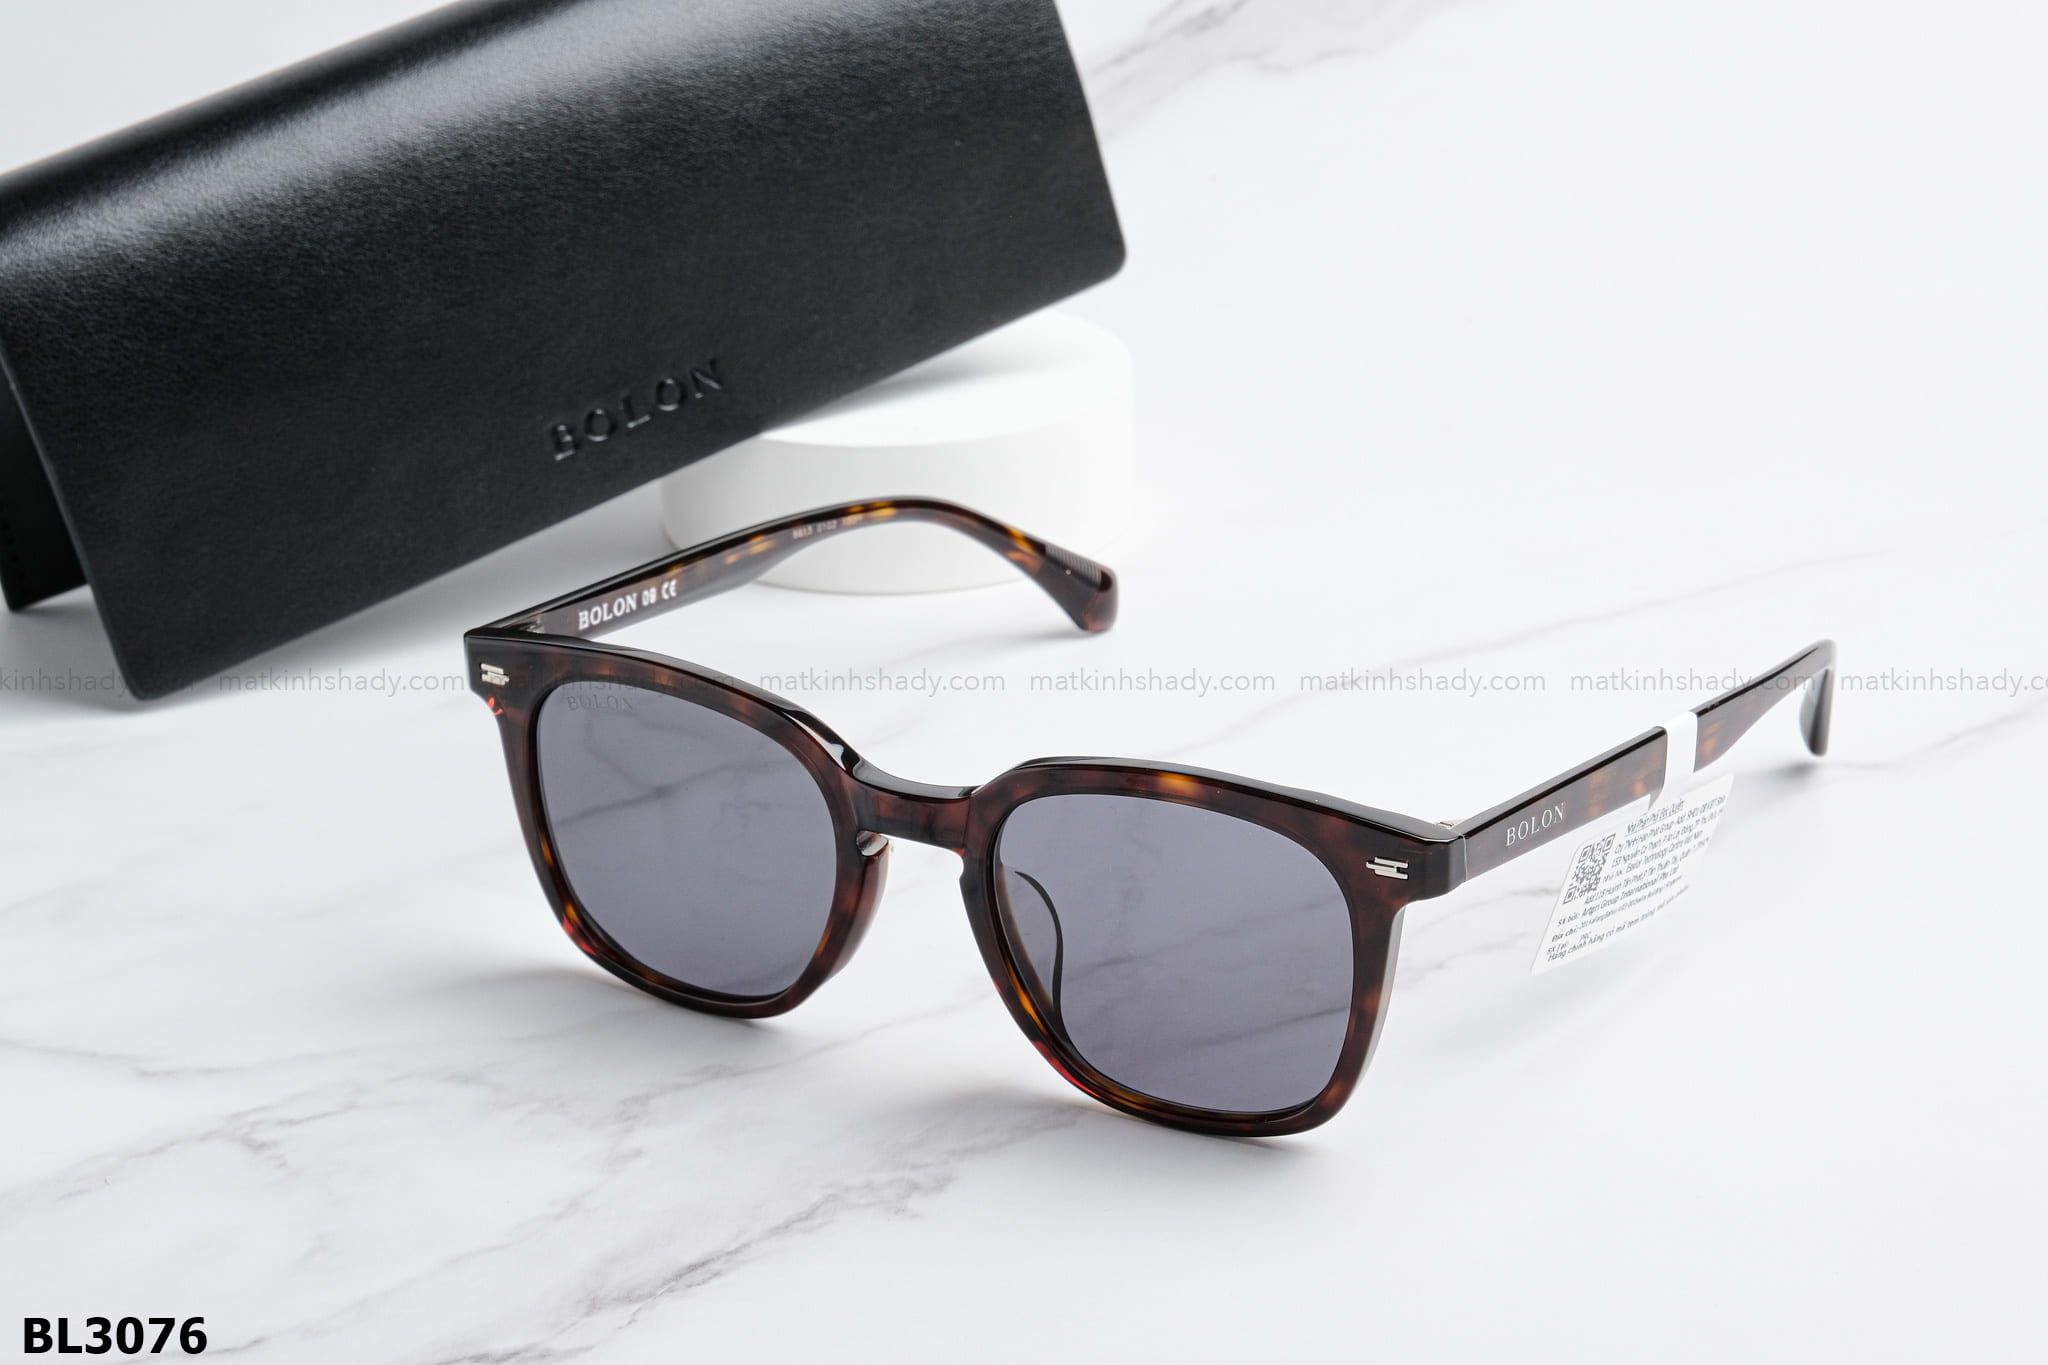  Bolon Eyewear - Sunglasses - BL3076 